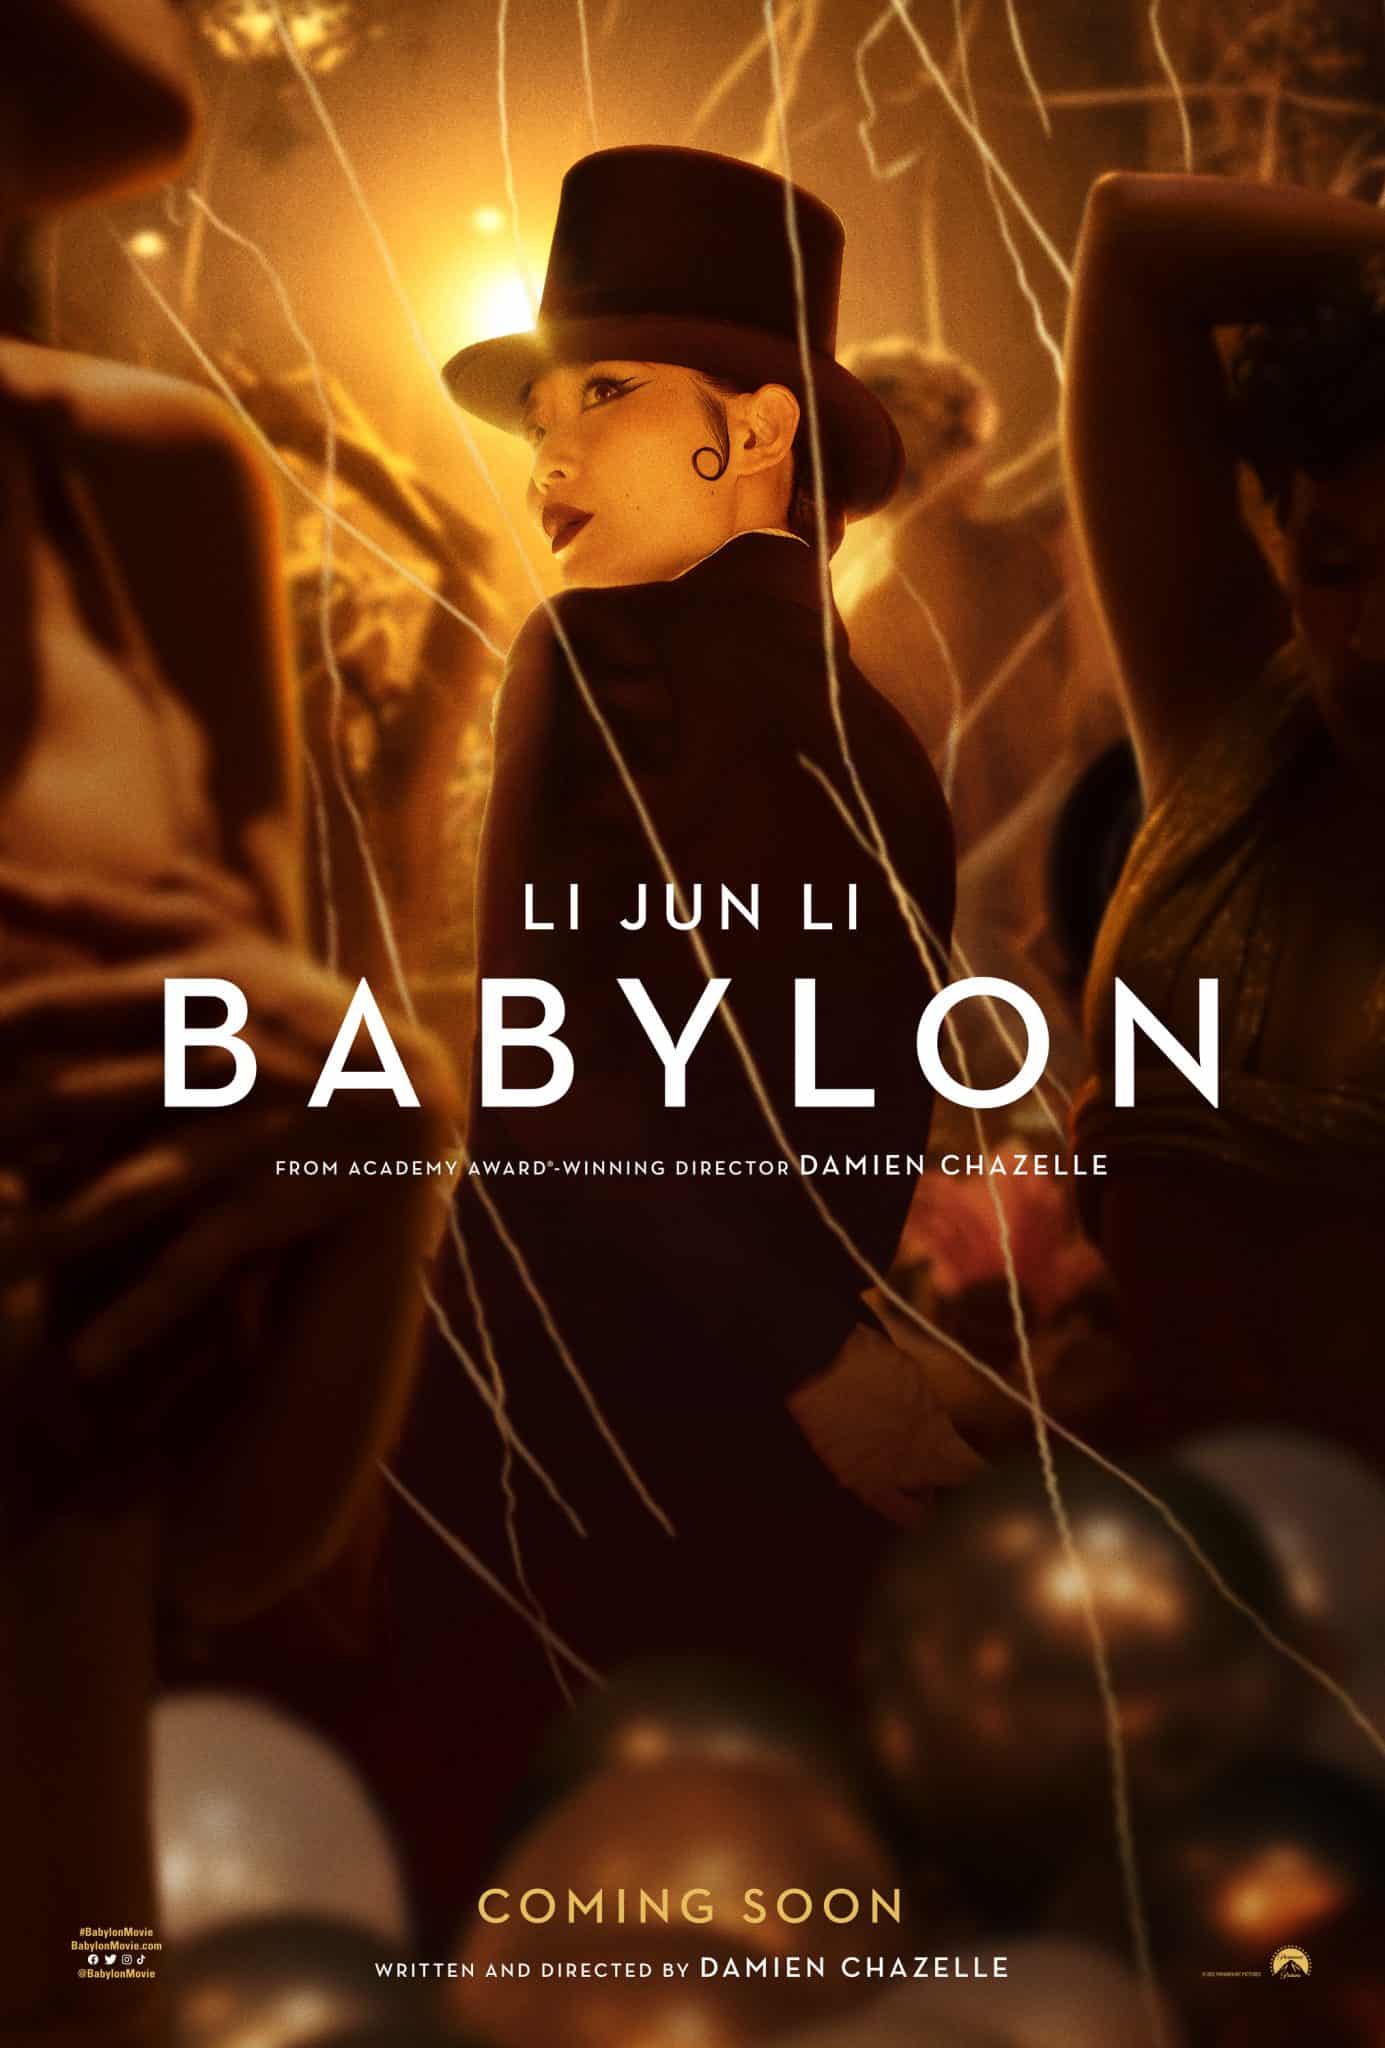 babylon movie review ign